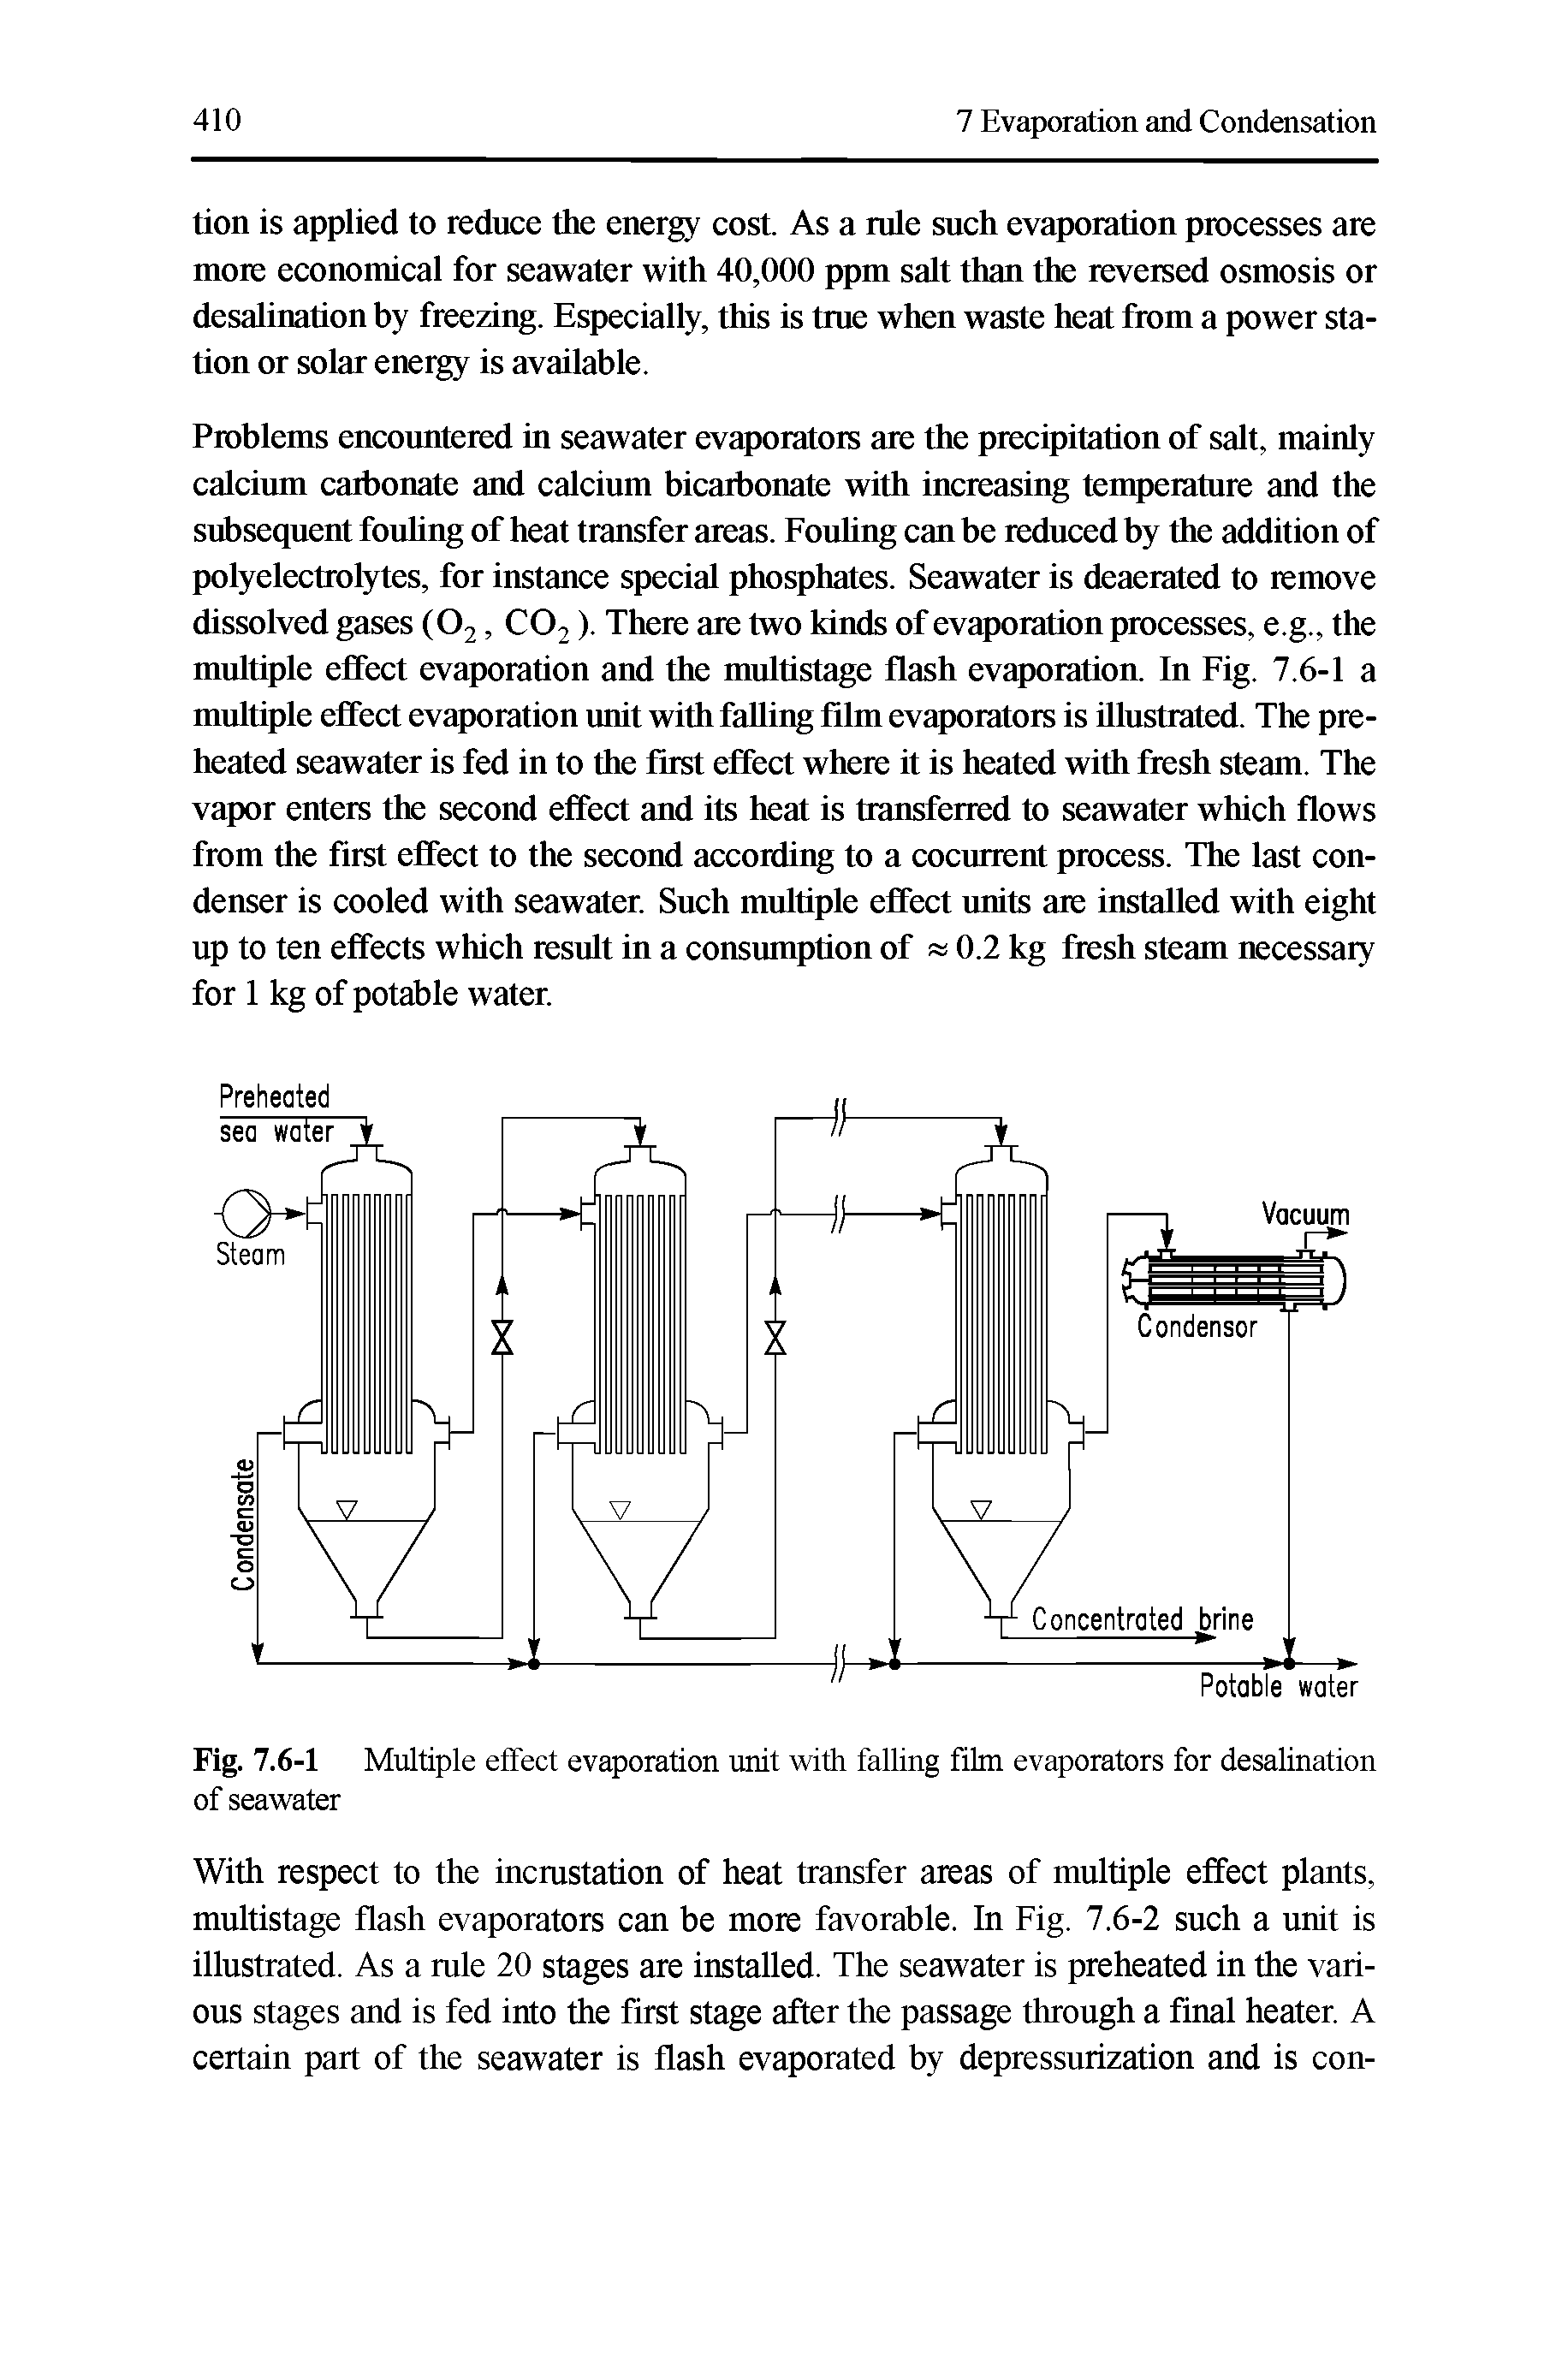 Fig. 7.6-1 Multiple effect evaporation unit with faUing film evaporators for desahnation of seawater...